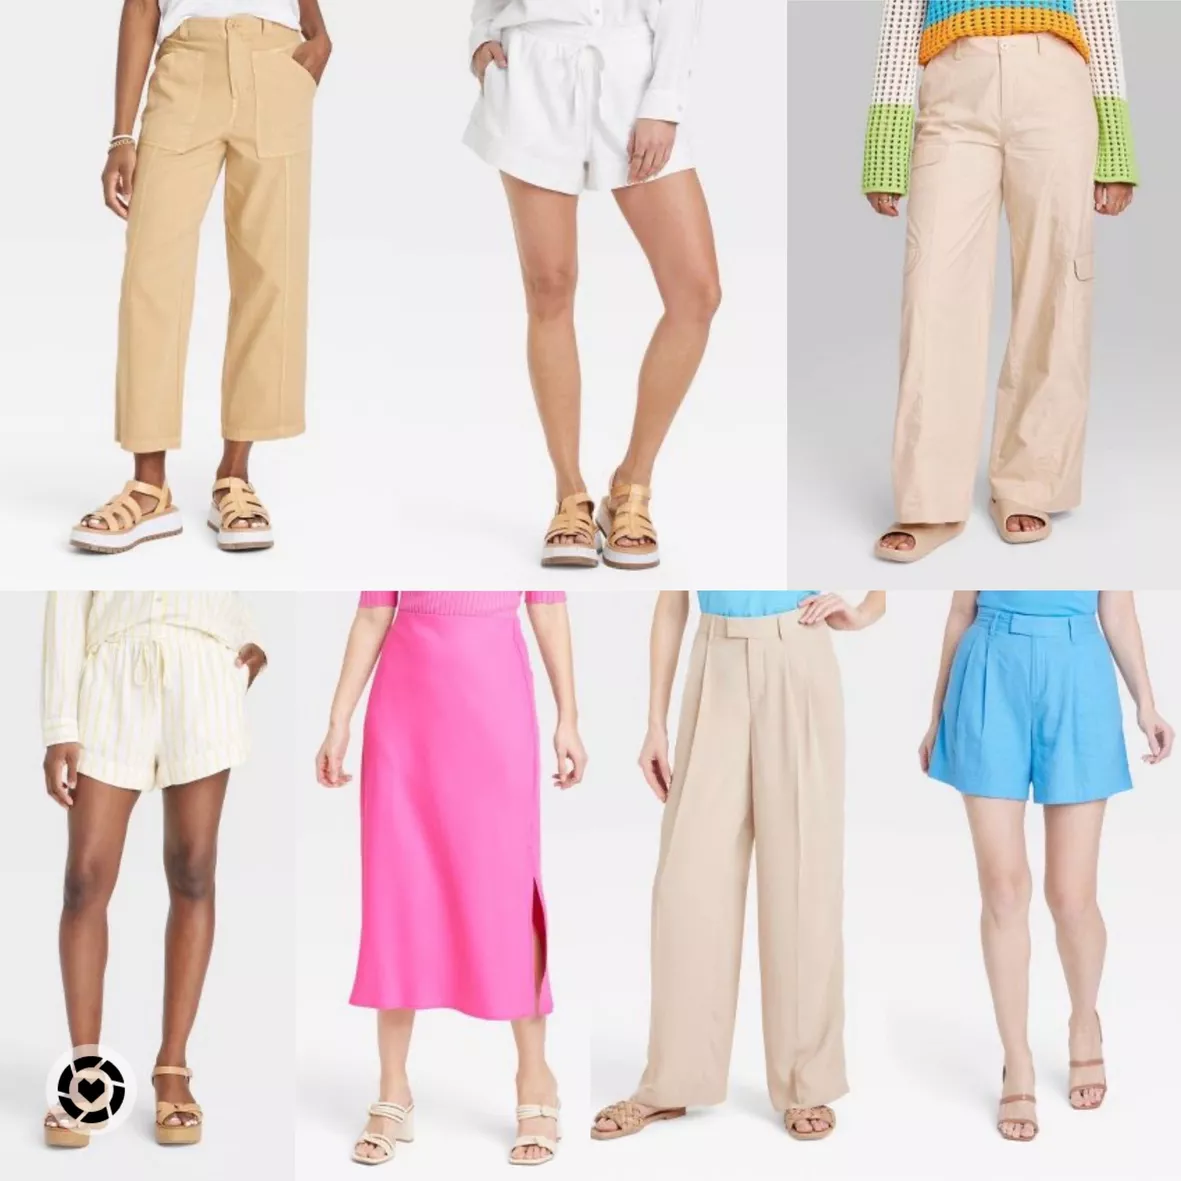 Women's Bottoms, Pants, Cargos, Shorts & Skirts